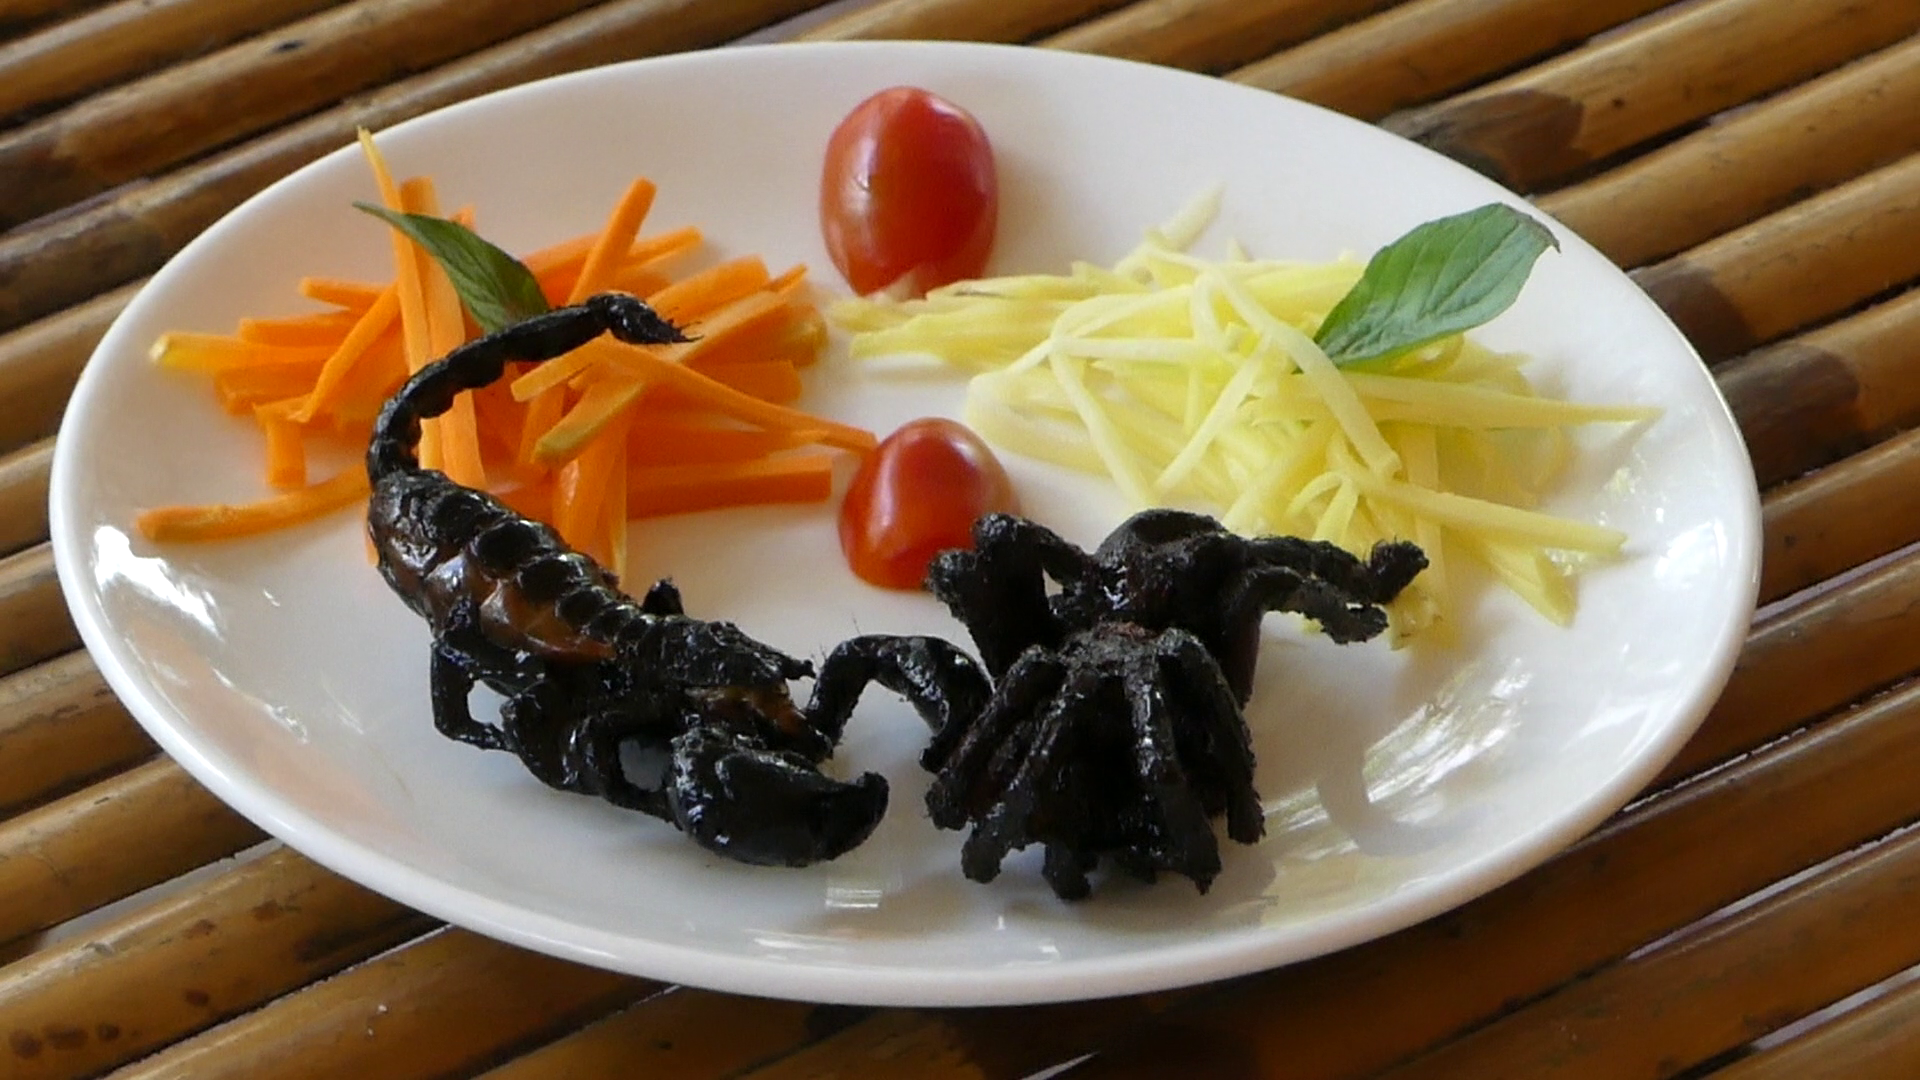 Cambodia - spider and scorpion